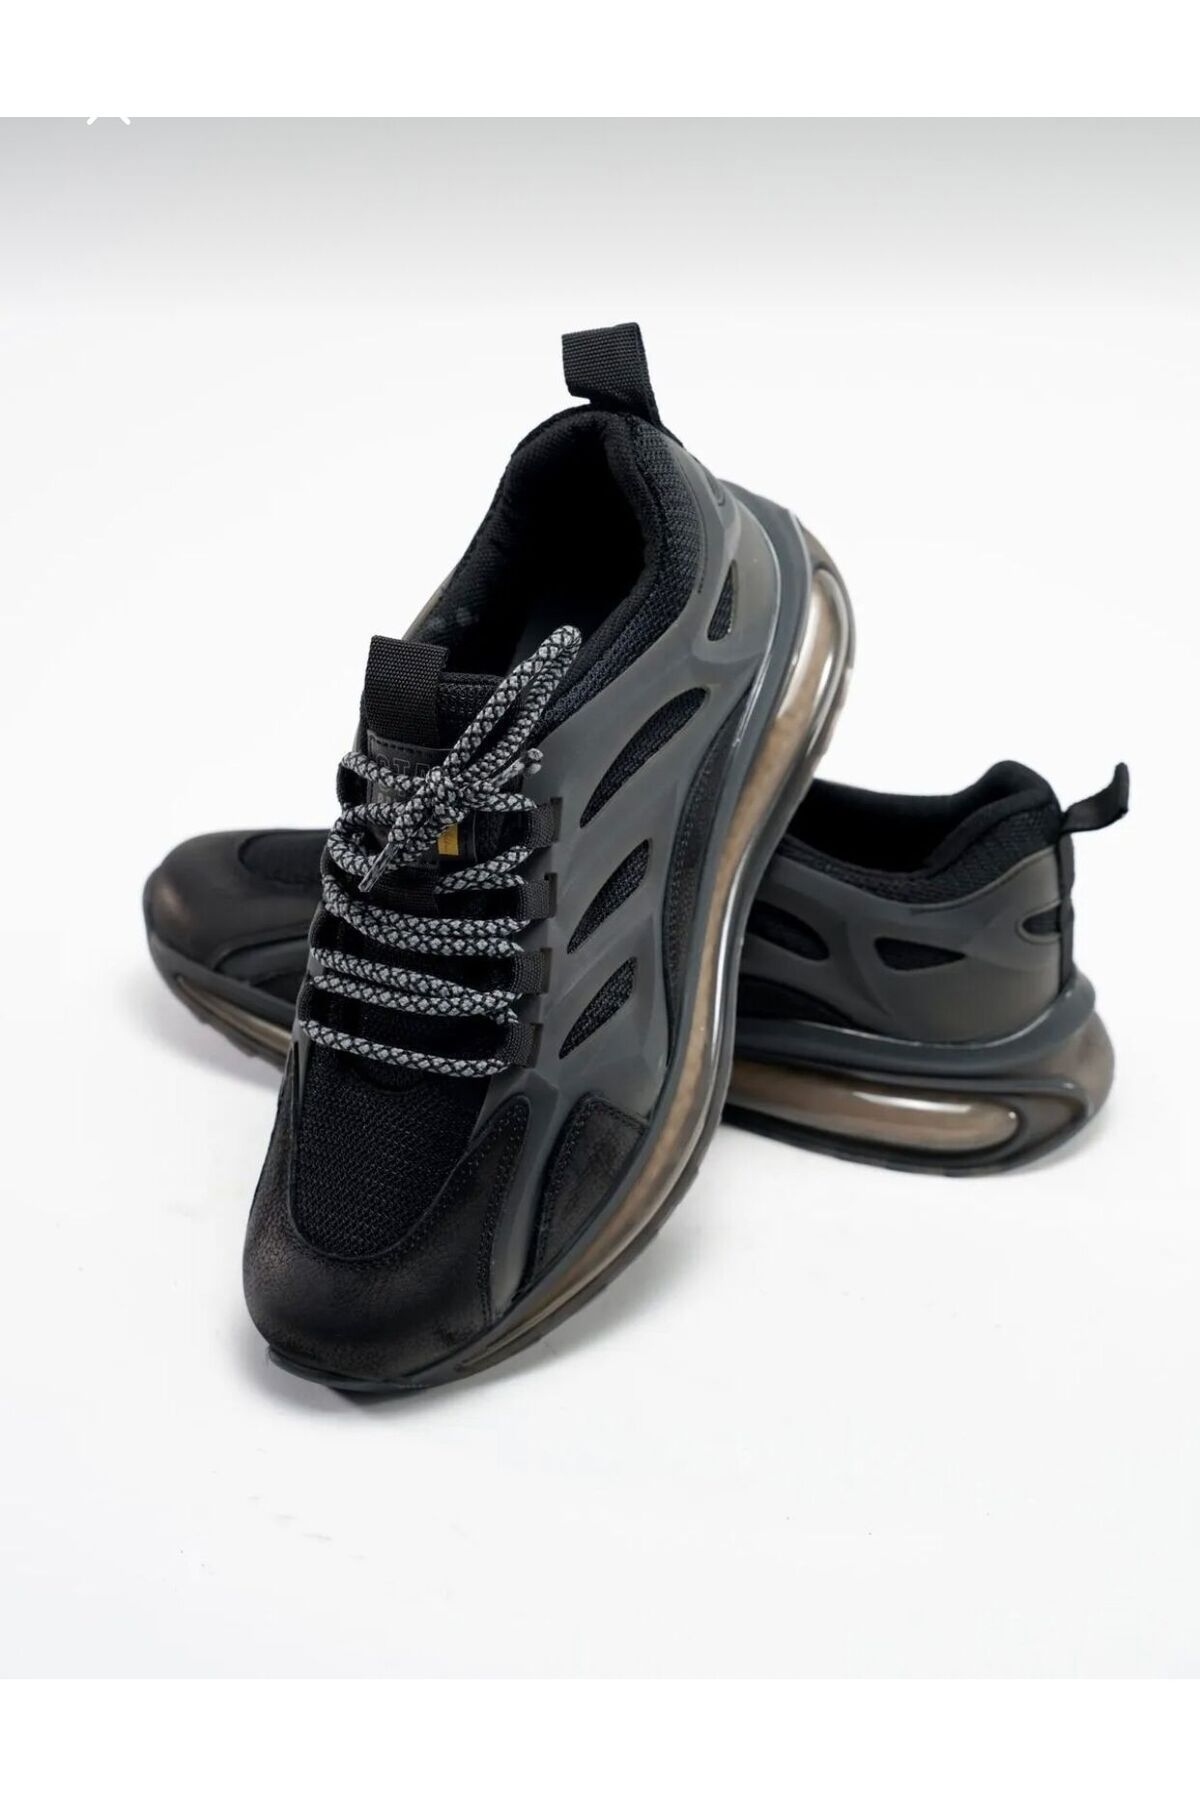 MARCOMEN Morcomen 152-17288 Balon Taban Sneaker Erkek Ayakkabı